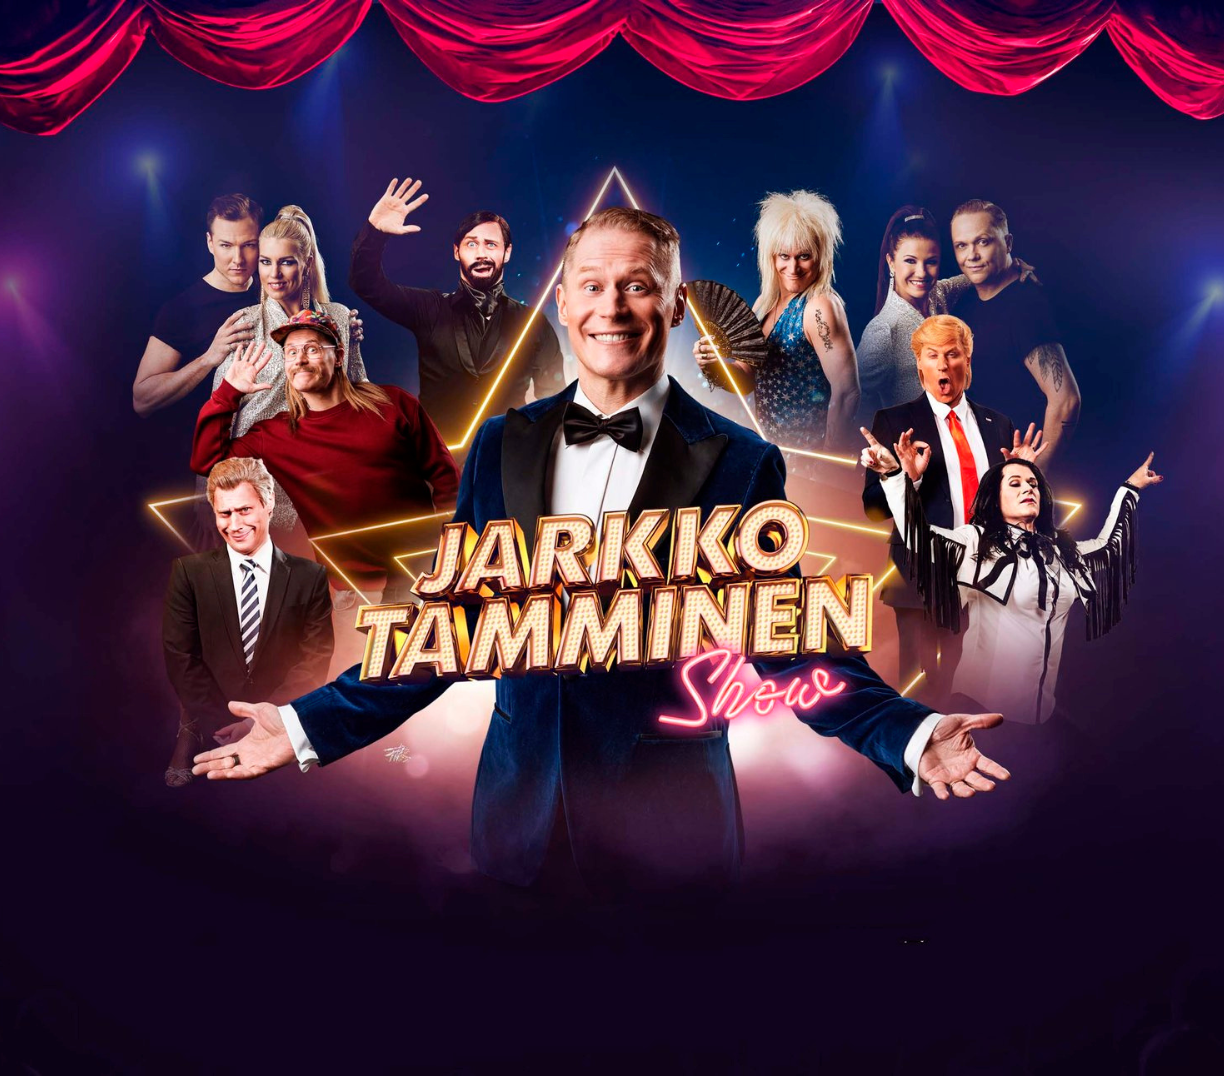 jarkko-tamminen-show-1224x1076px.png